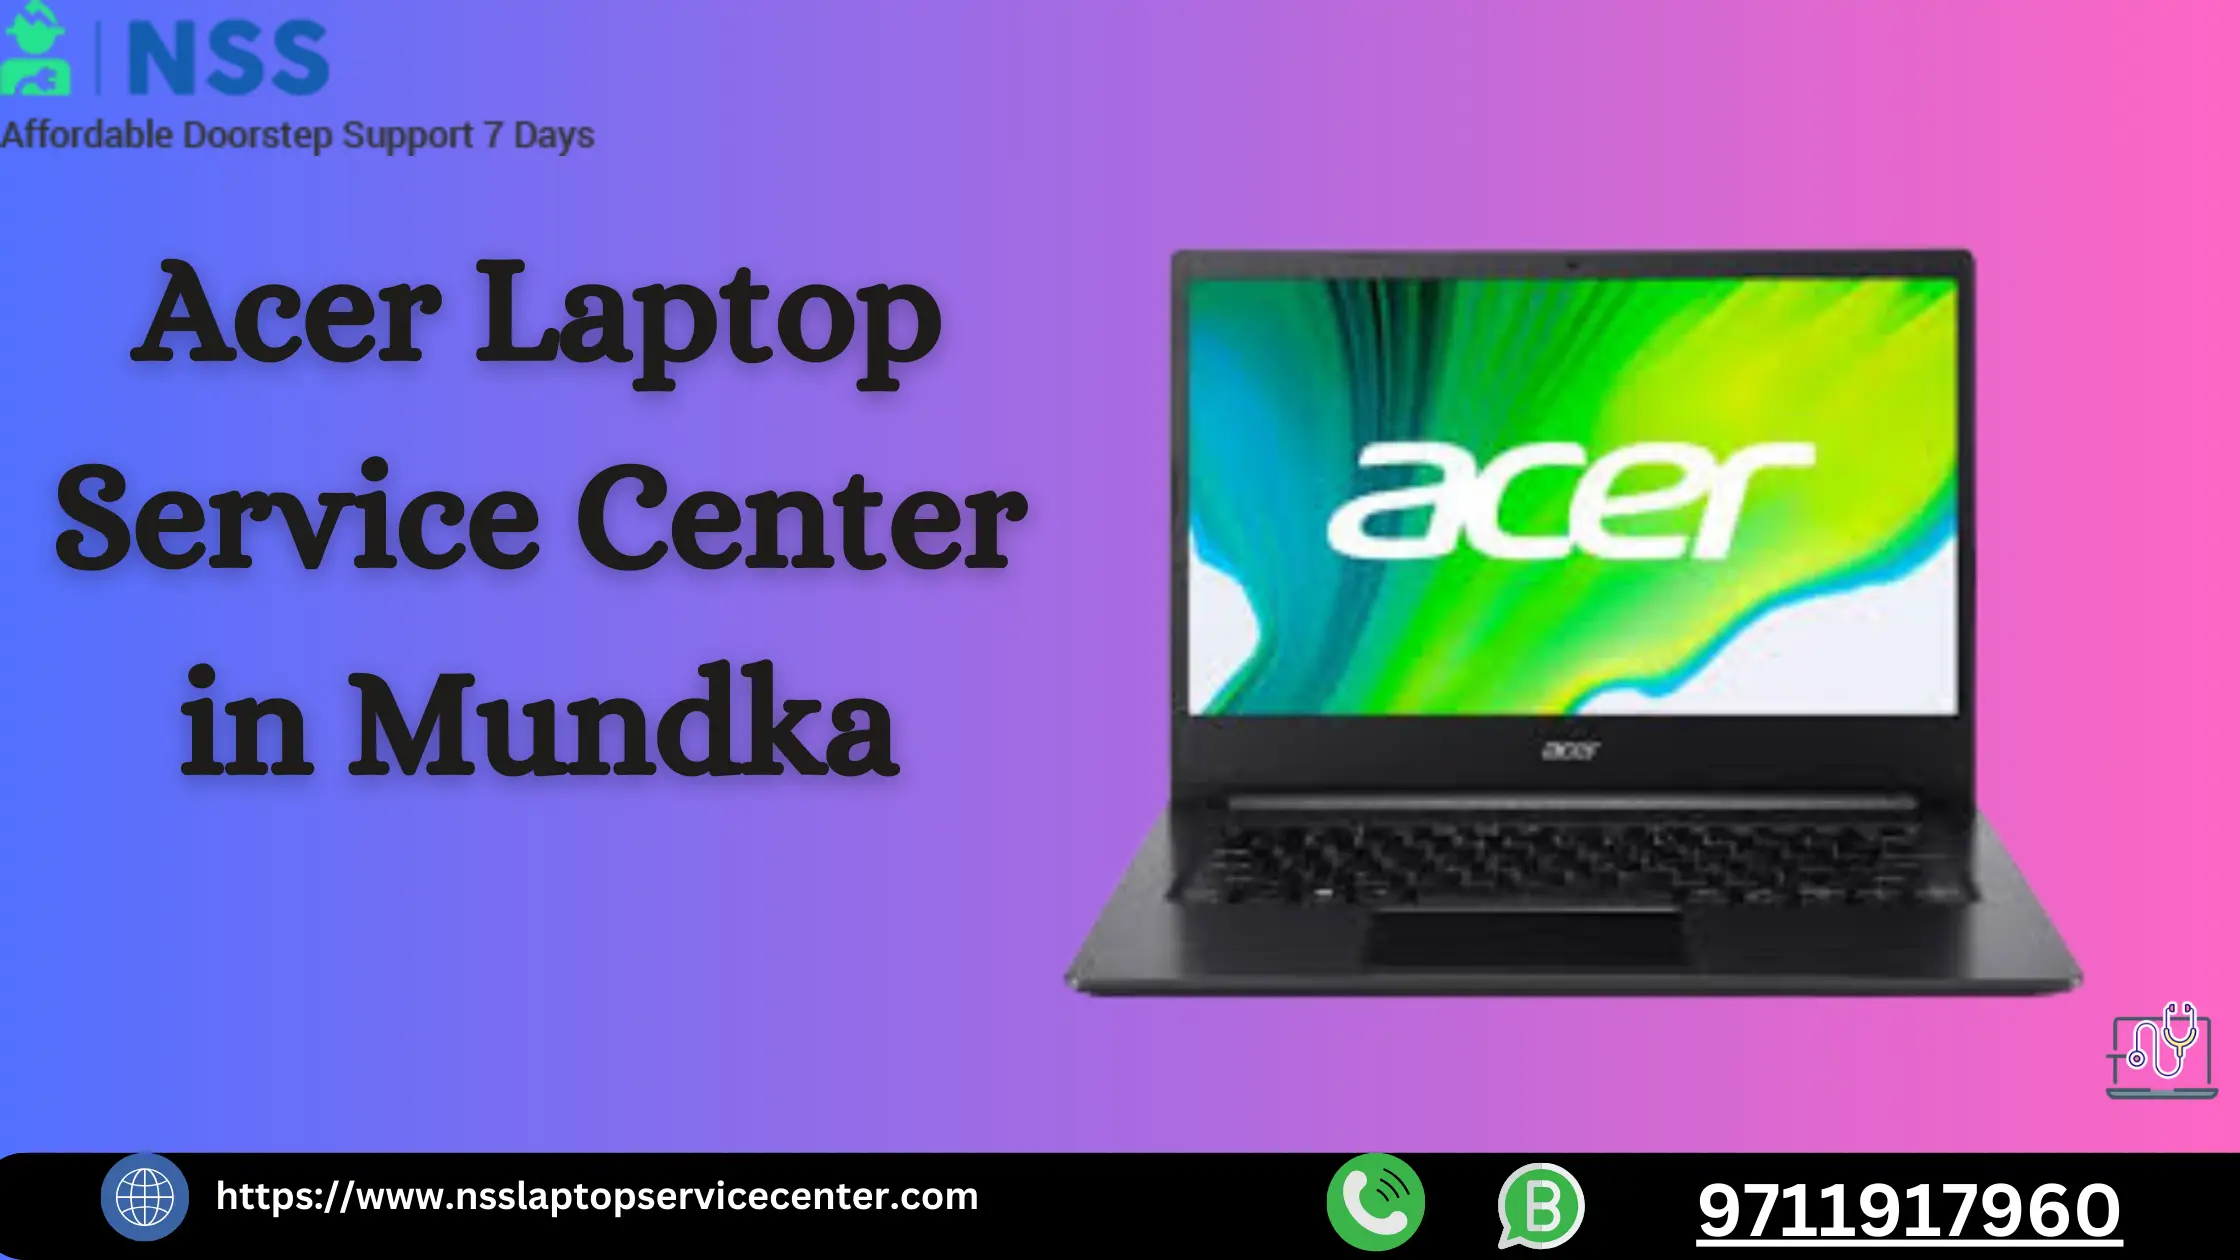 Acer Laptop Service Center in Mundka Near Delhi